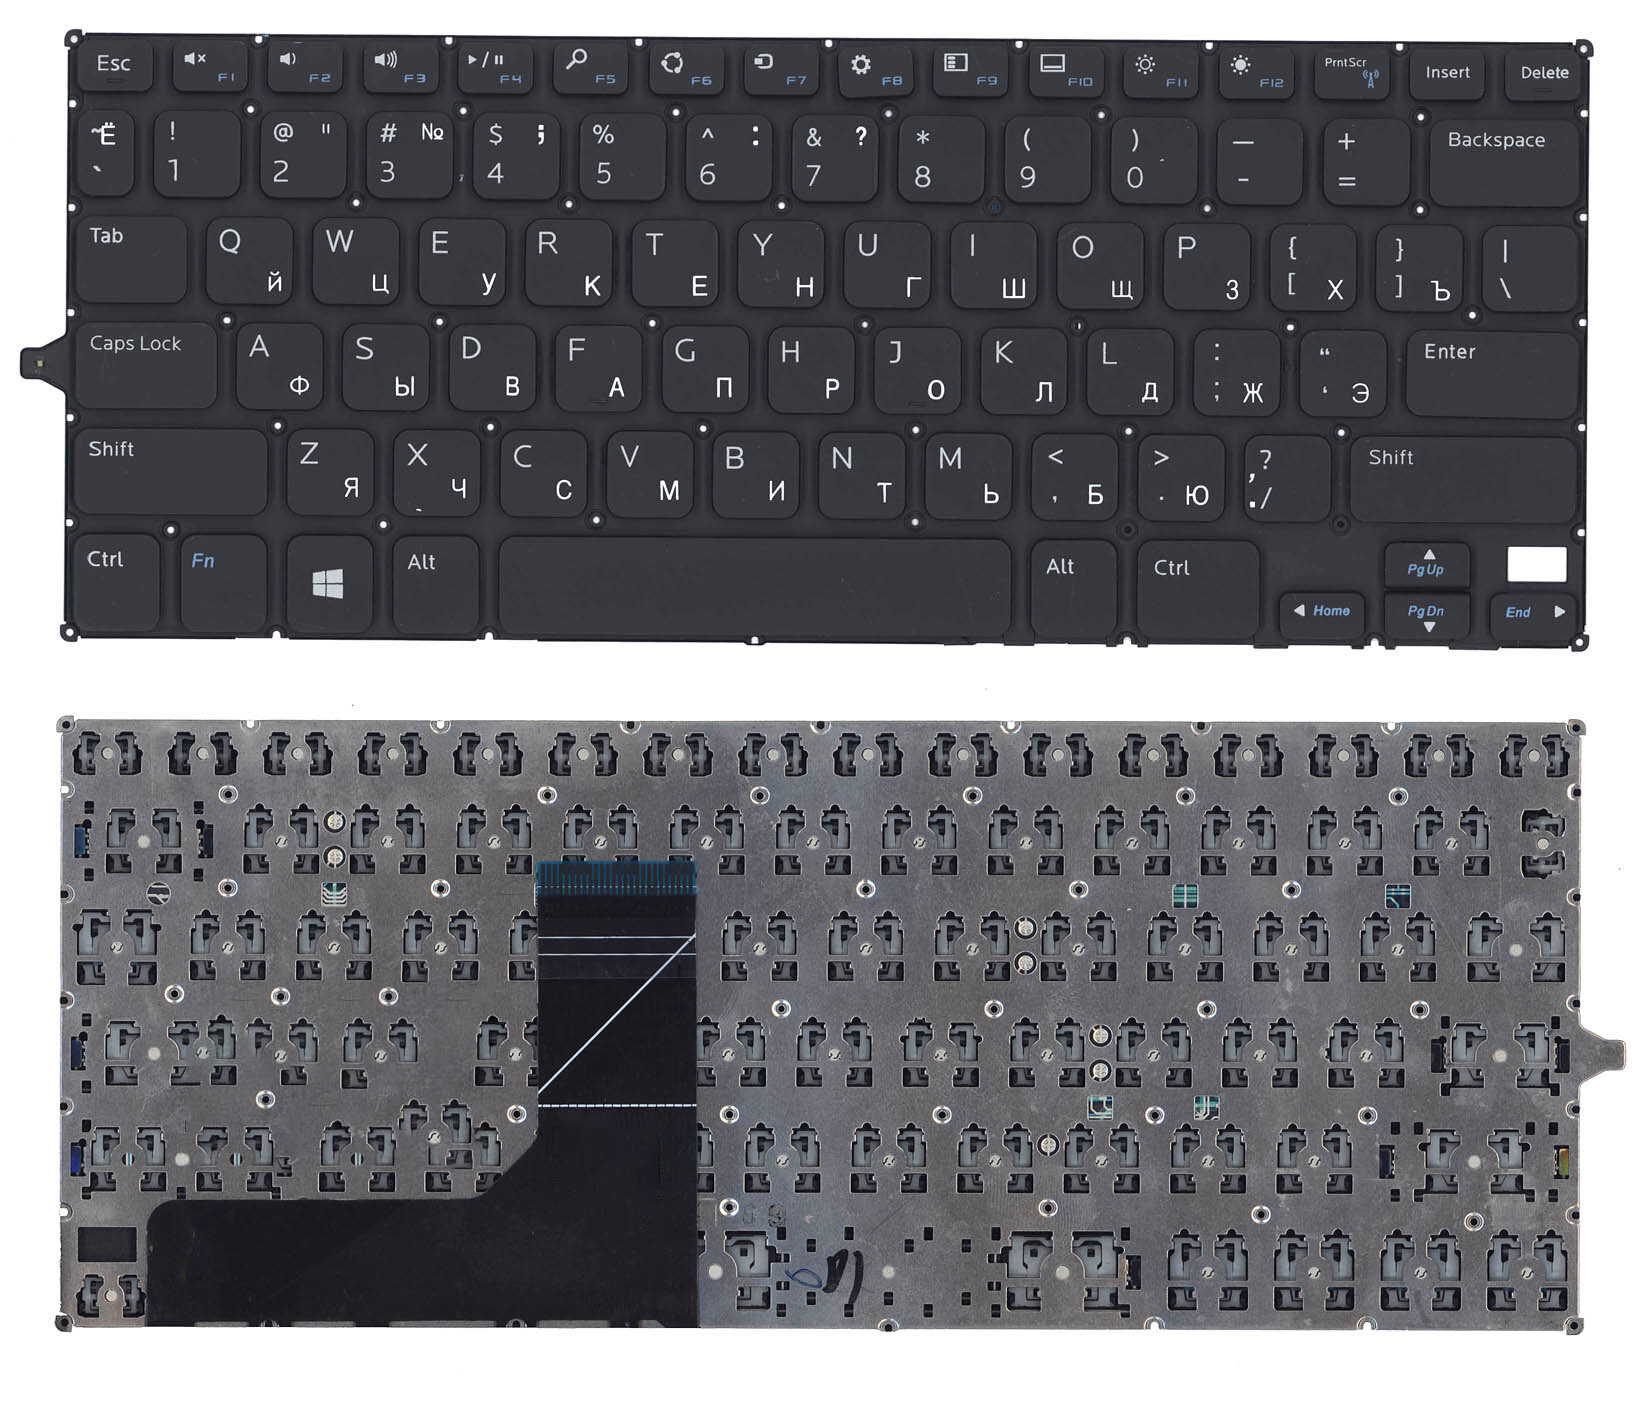 Клавиатура для ноутбука Dell Inspiron 11 3147 черная